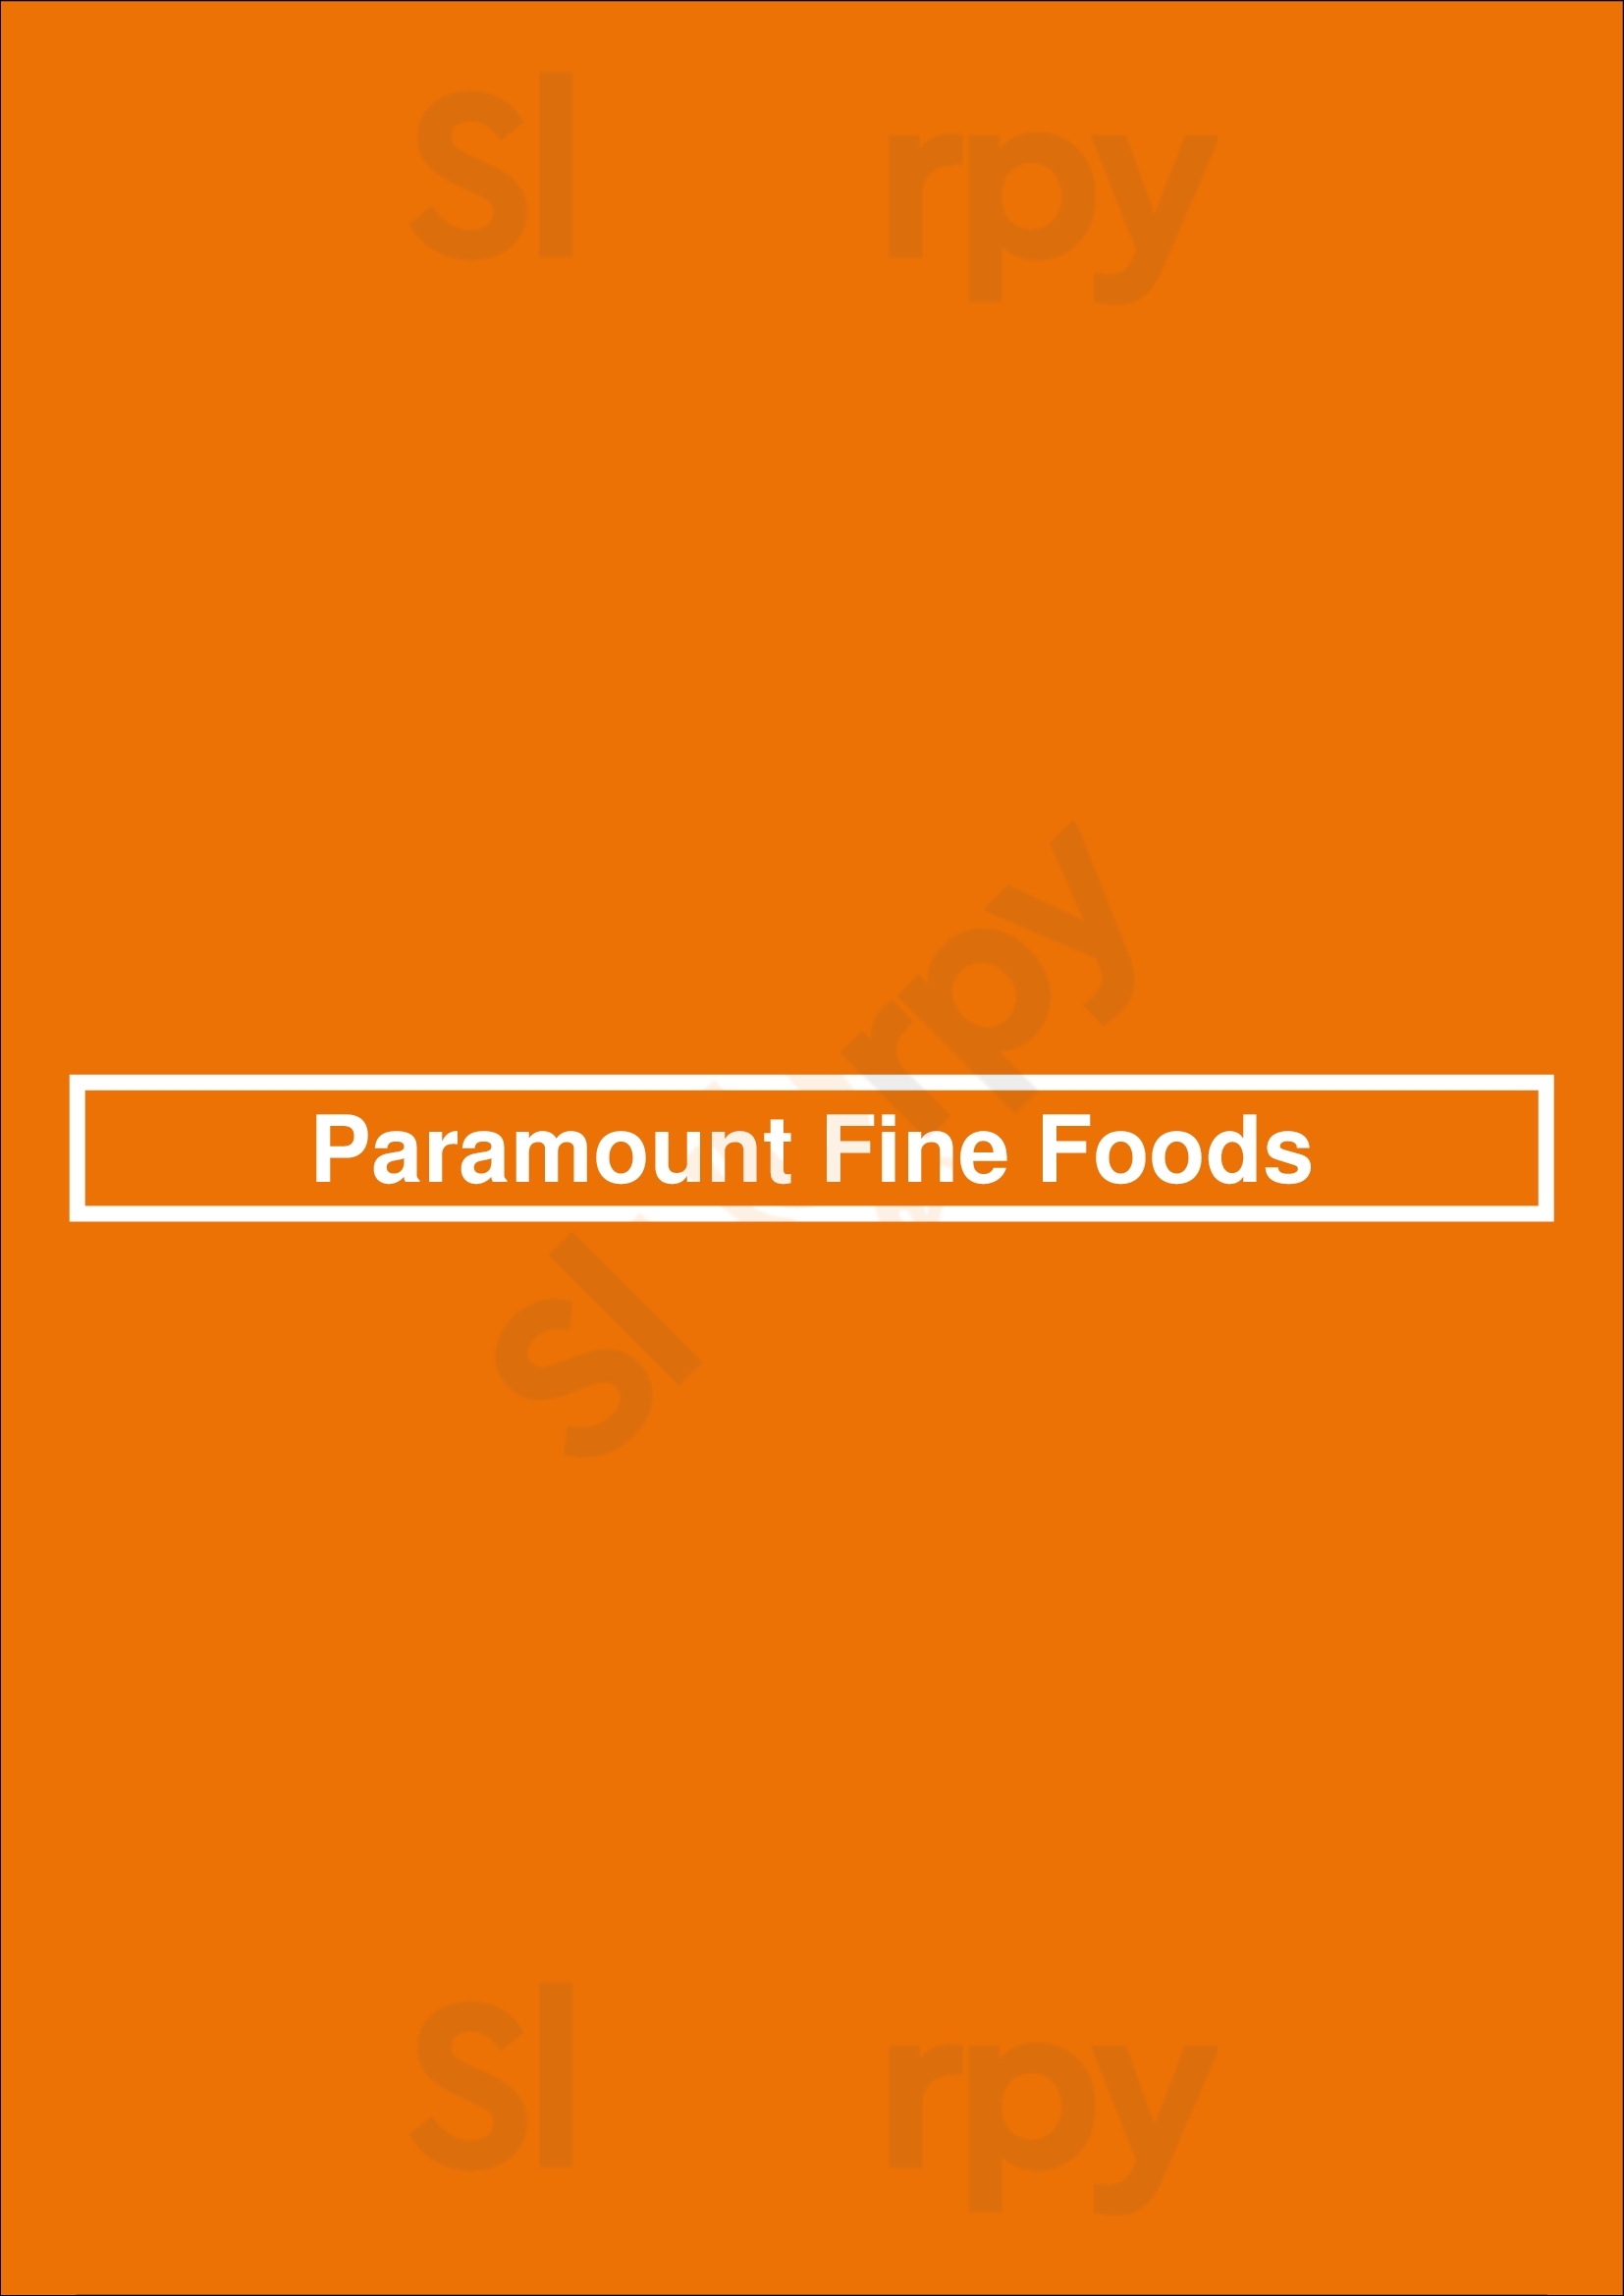 Paramount Fine Foods London Menu - 1